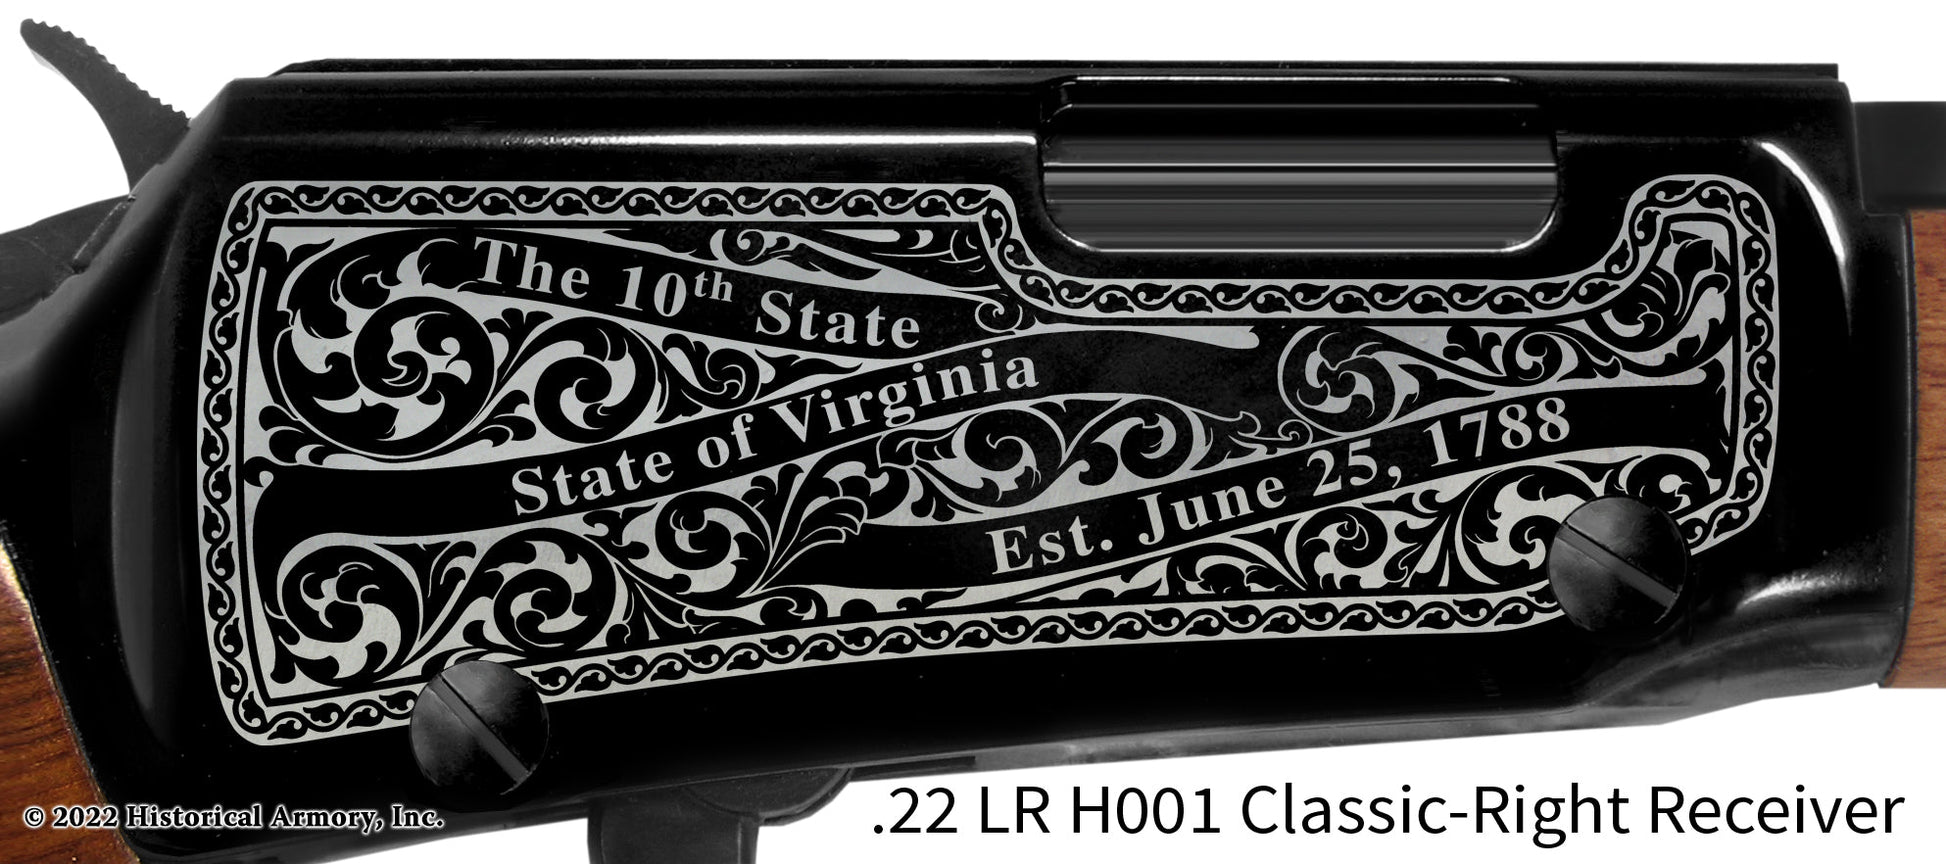 Bath County Virginia Engraved Henry H001 Rifle